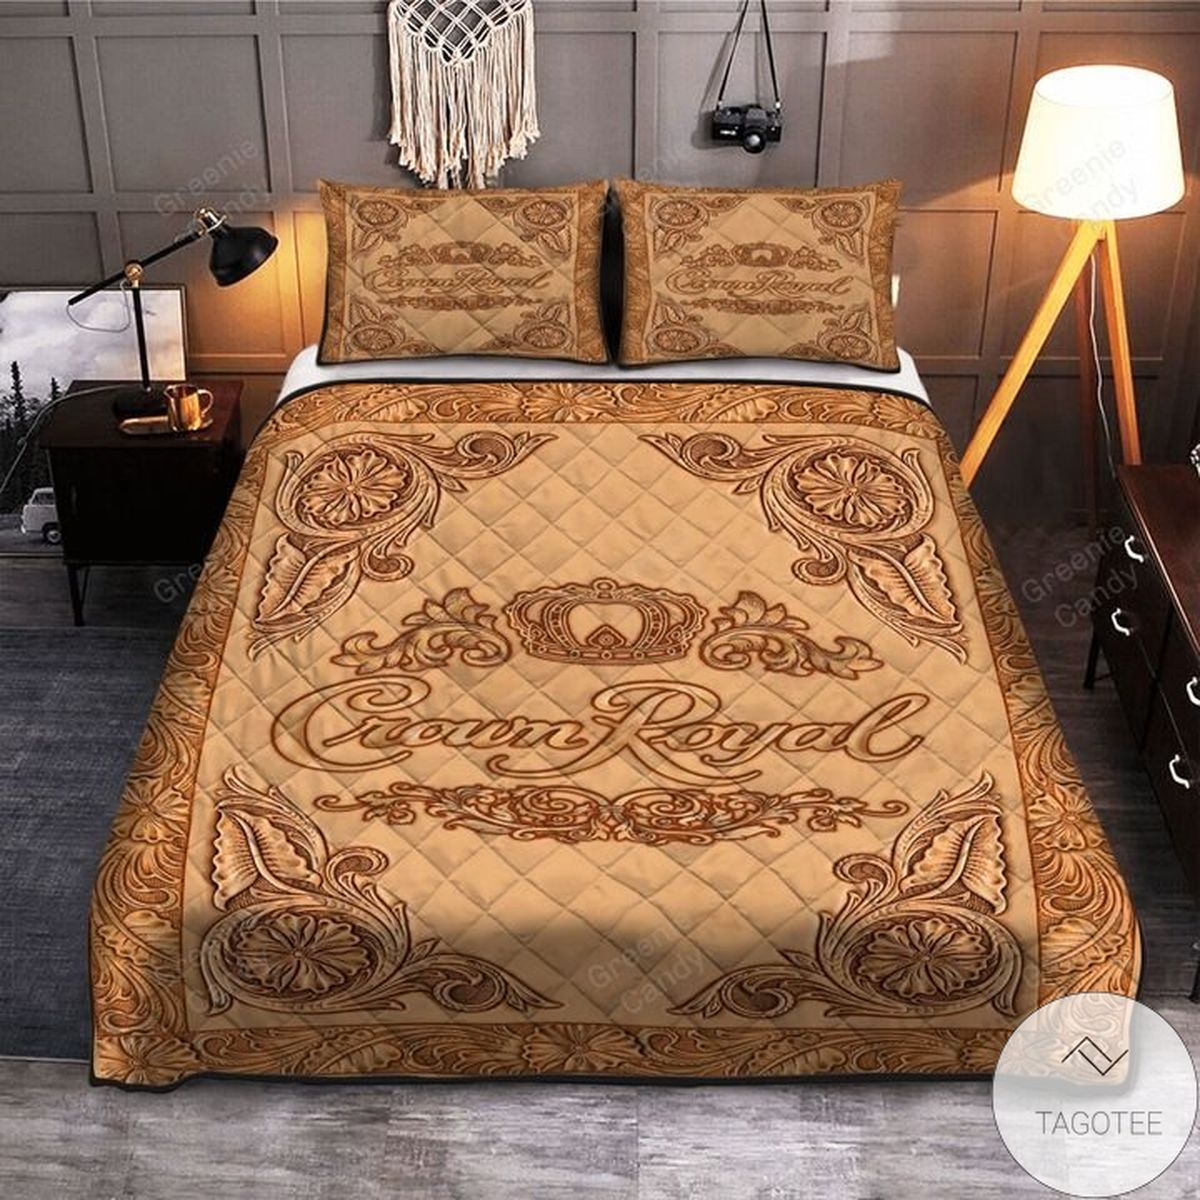 Crown Royal Quilt Bedding Set